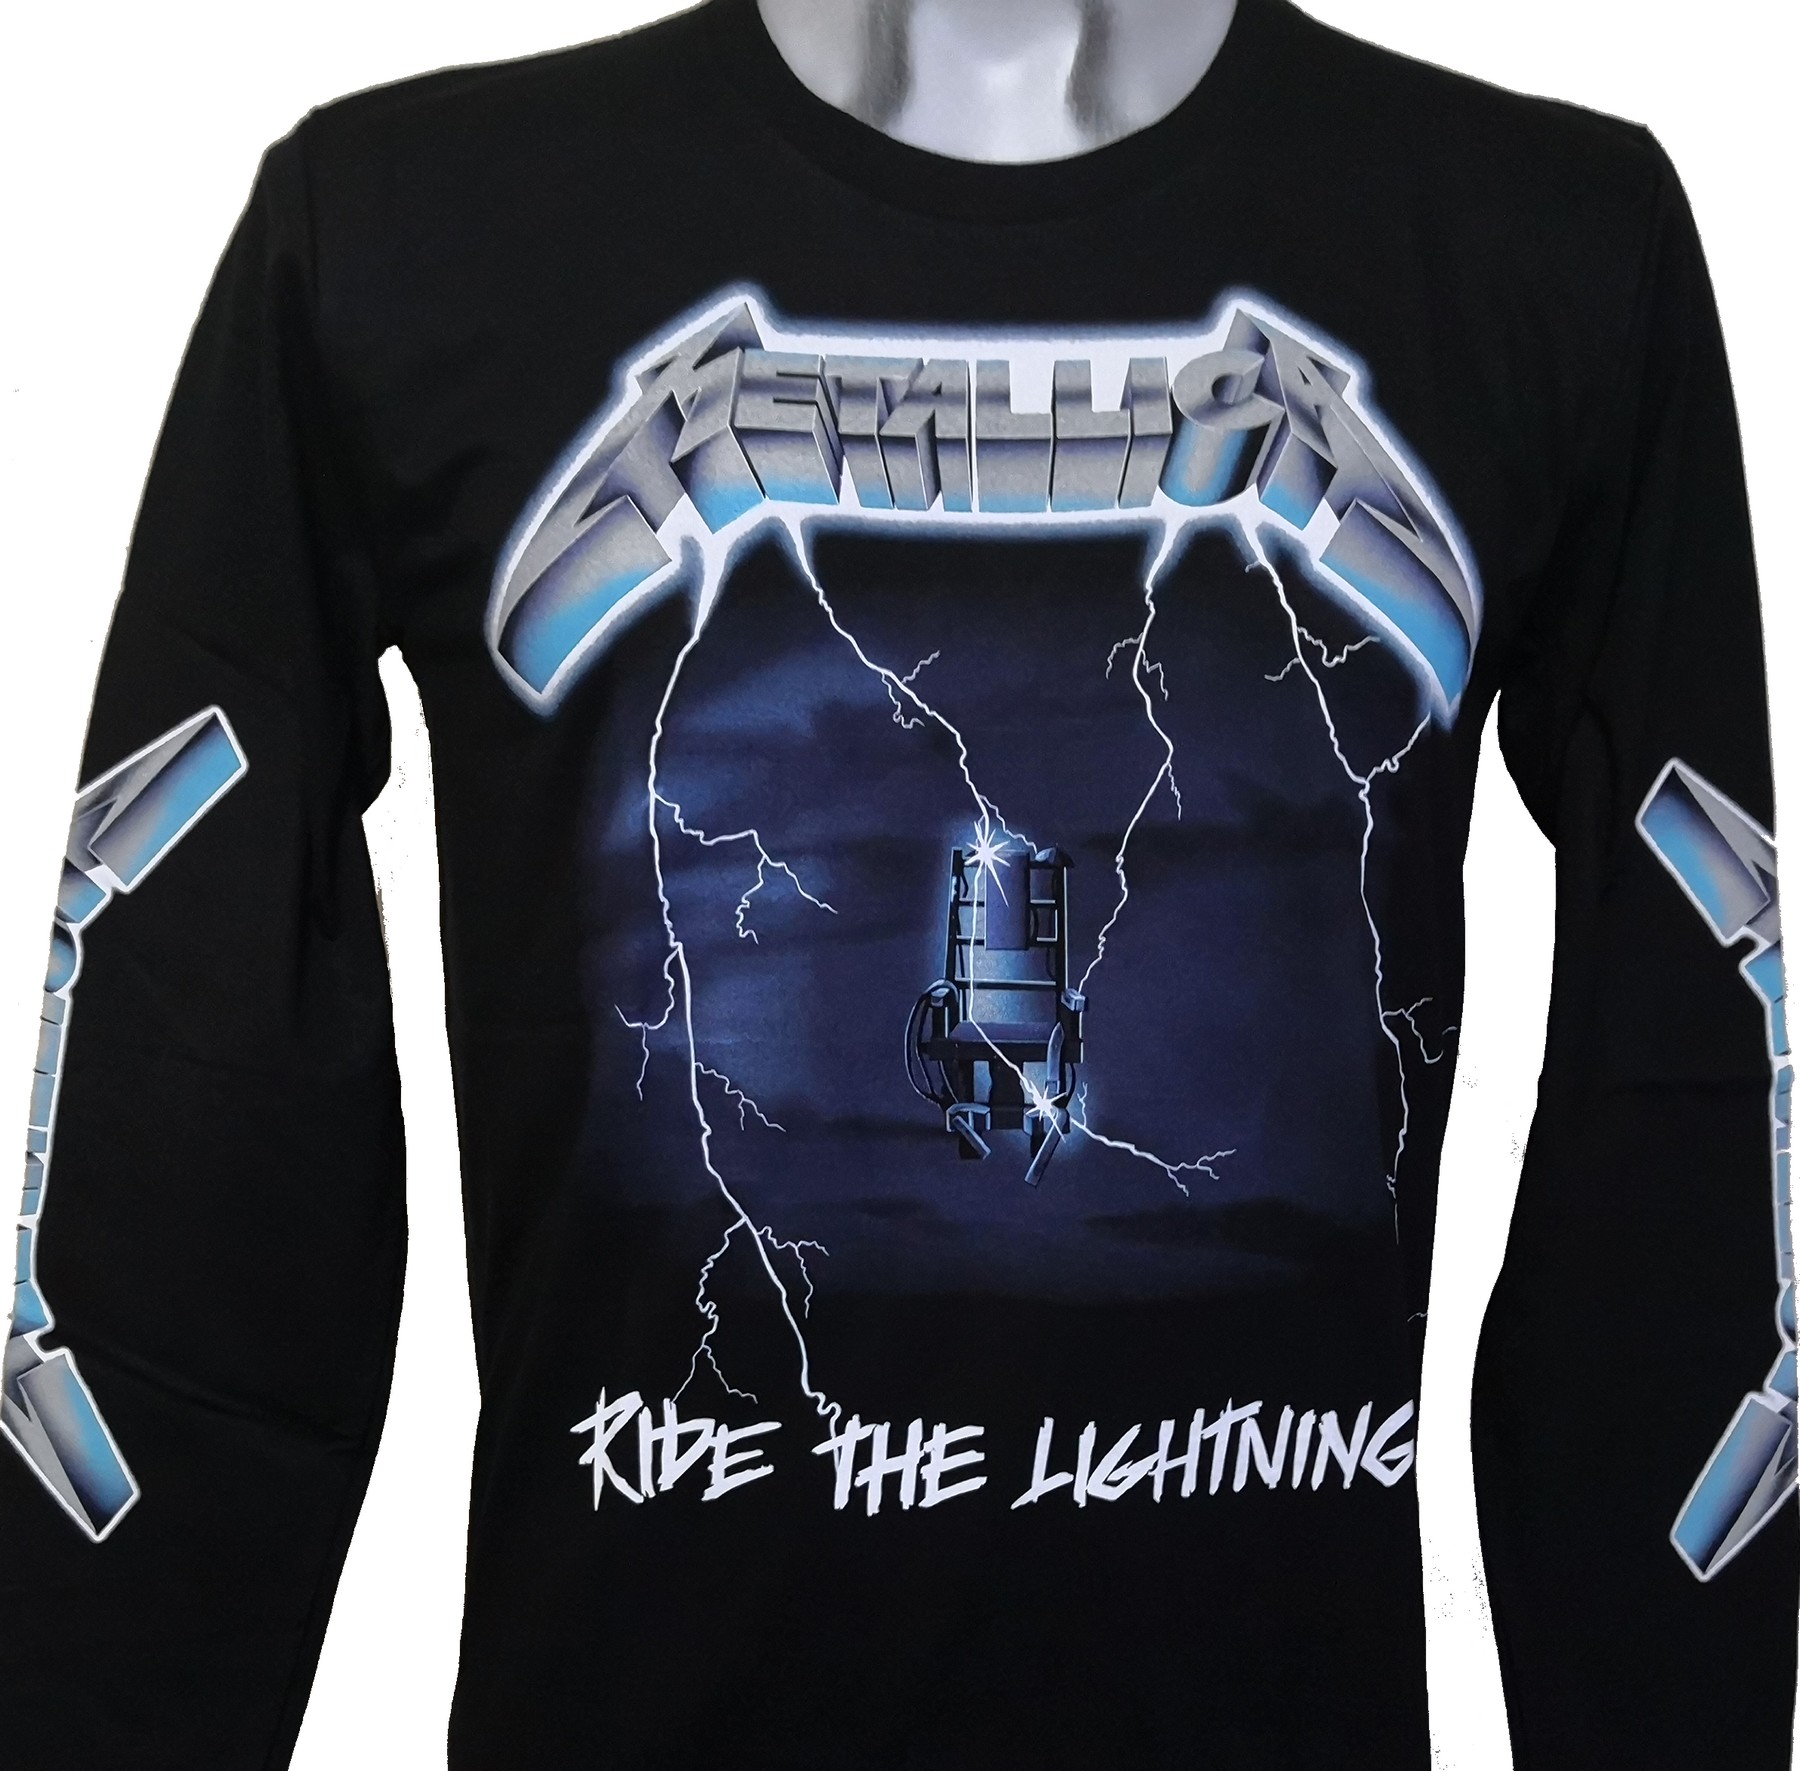 metallica ride the lightning tour shirt